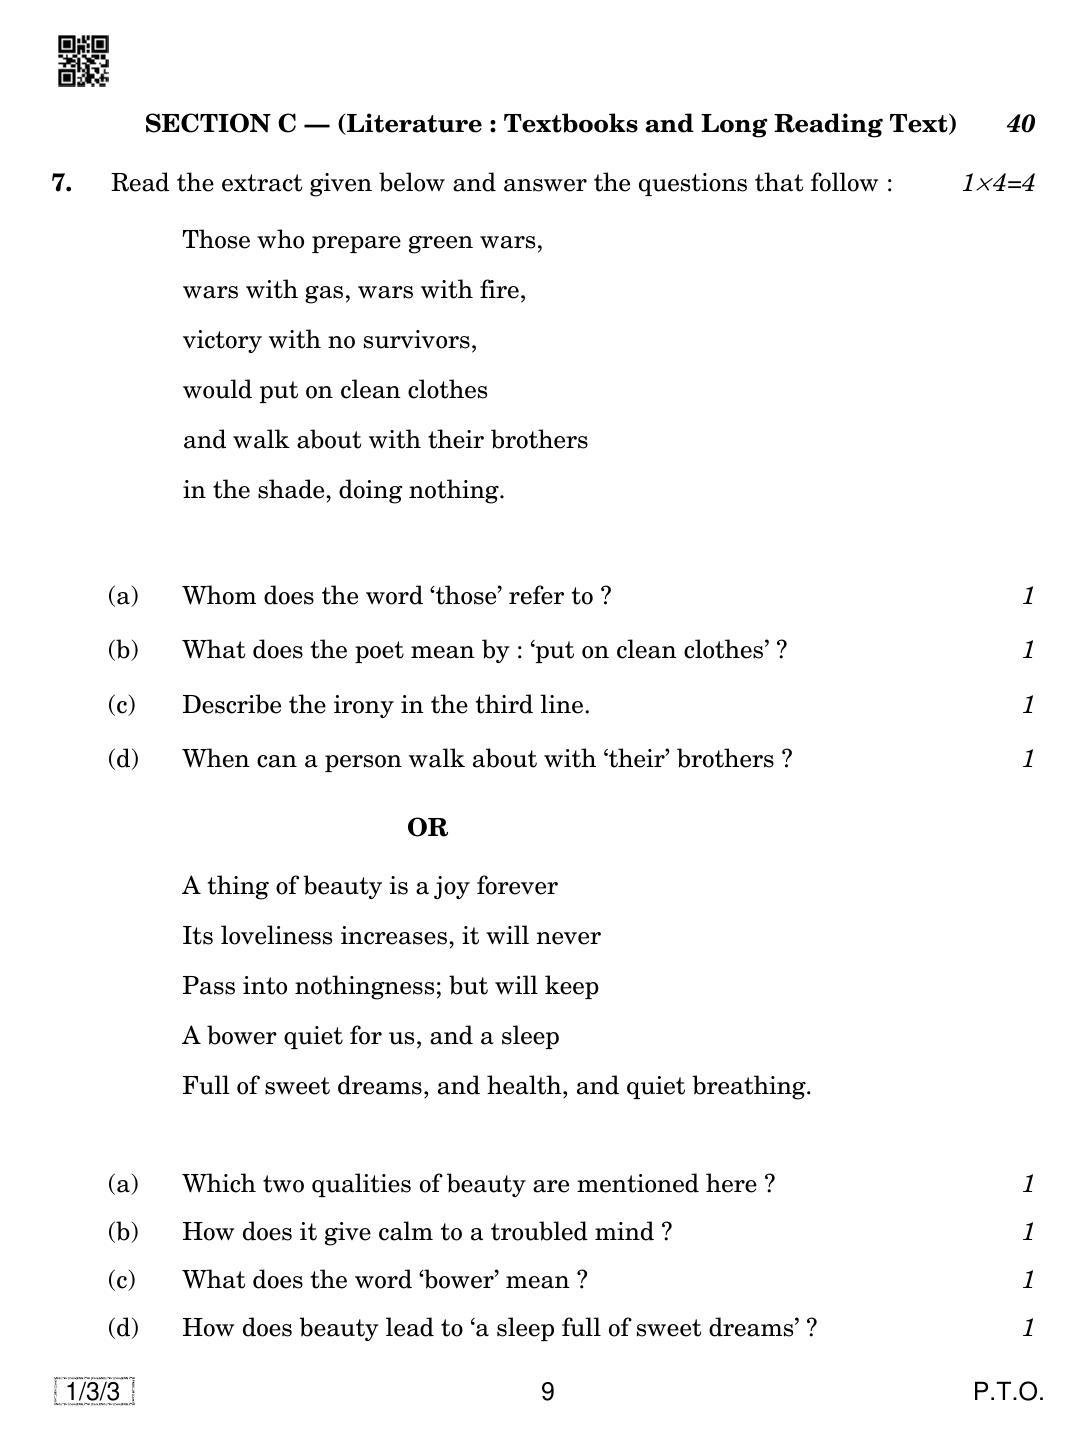 CBSE Class 12 1-3-3 English Core 2019 Question Paper - Page 9